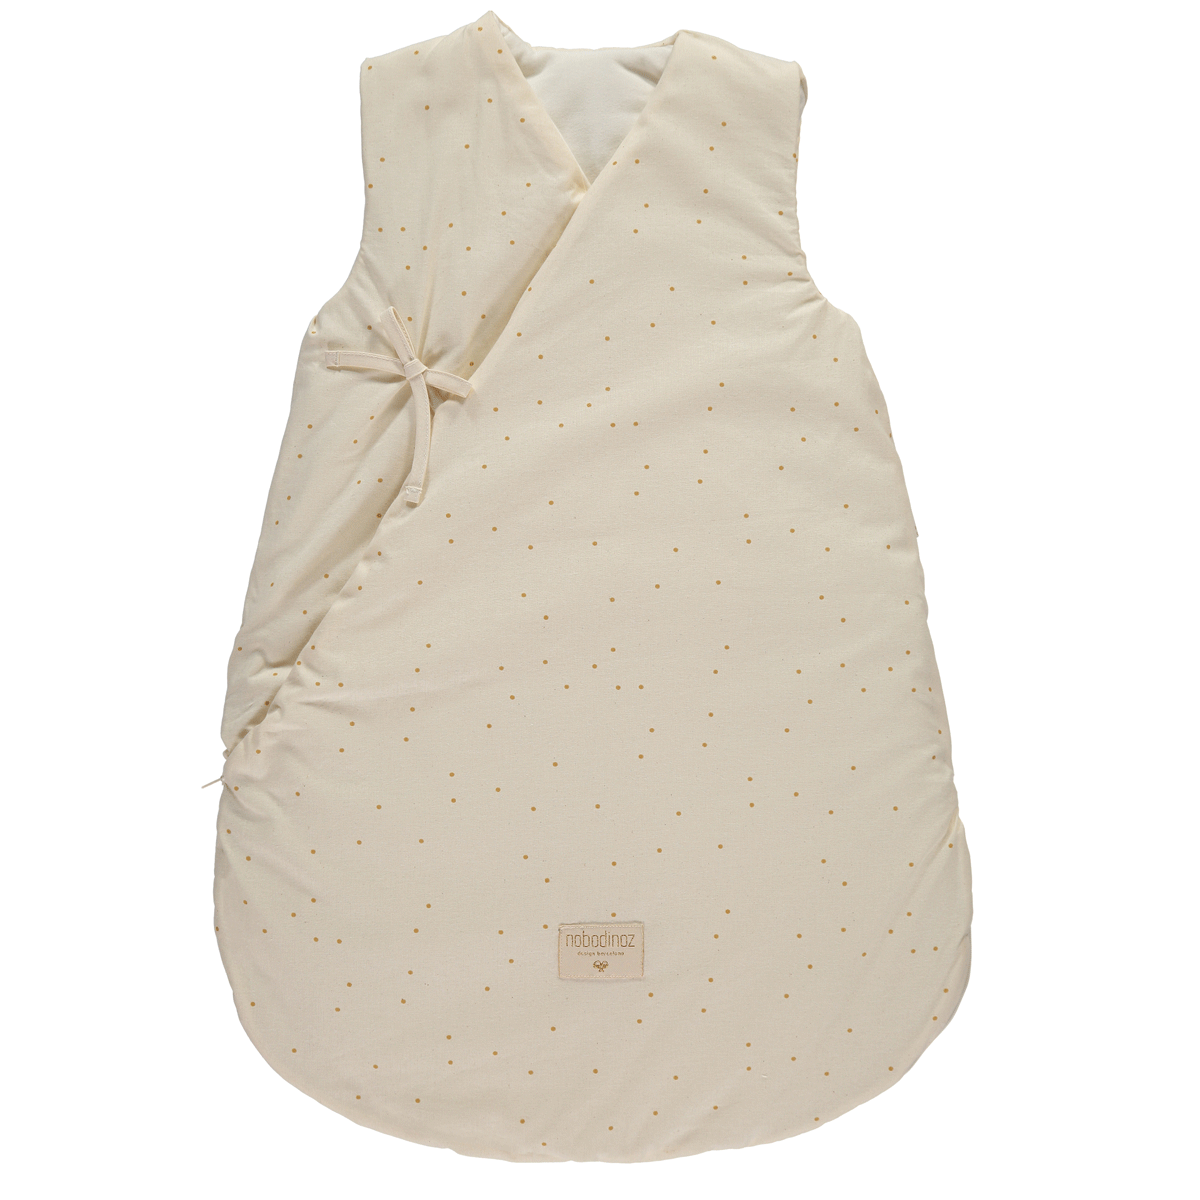 Nobodinoz Cloud winter sleeping bag • honey sweet dots natural